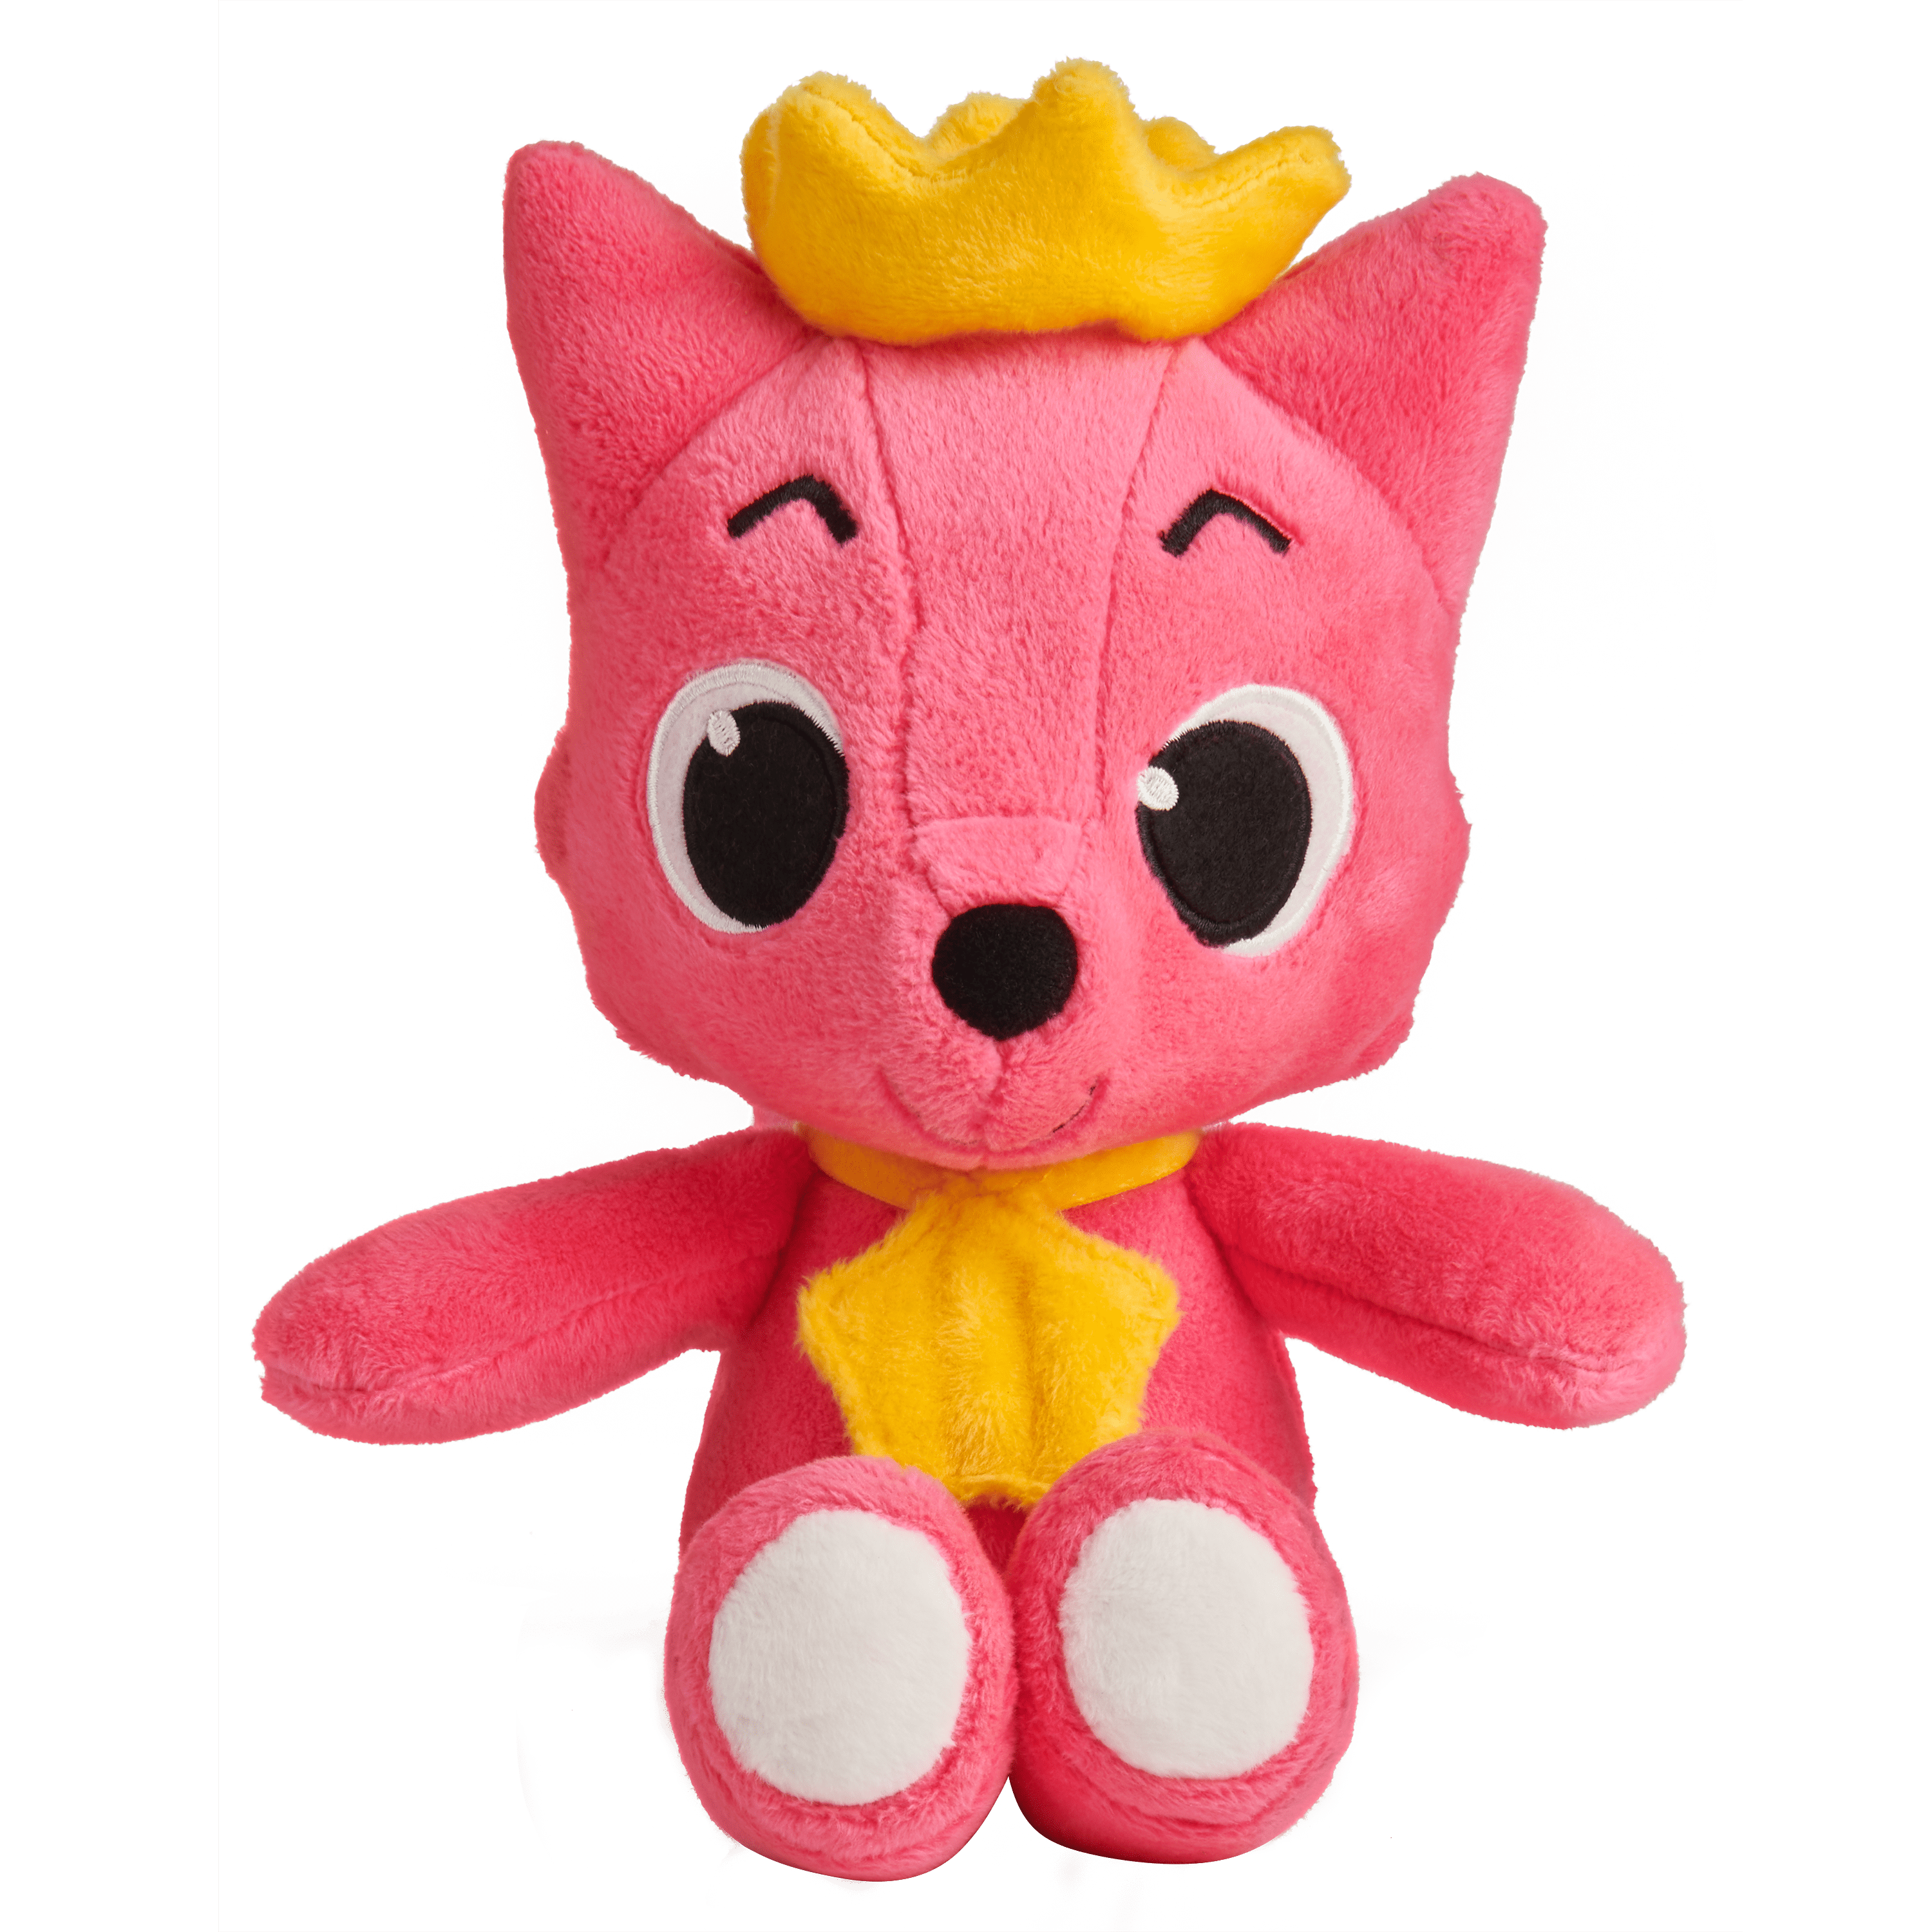 Pinkfong Wonderstar Plush Doll Hogi 30cm TV Character Boys Girls Kids Toy Gift for sale online